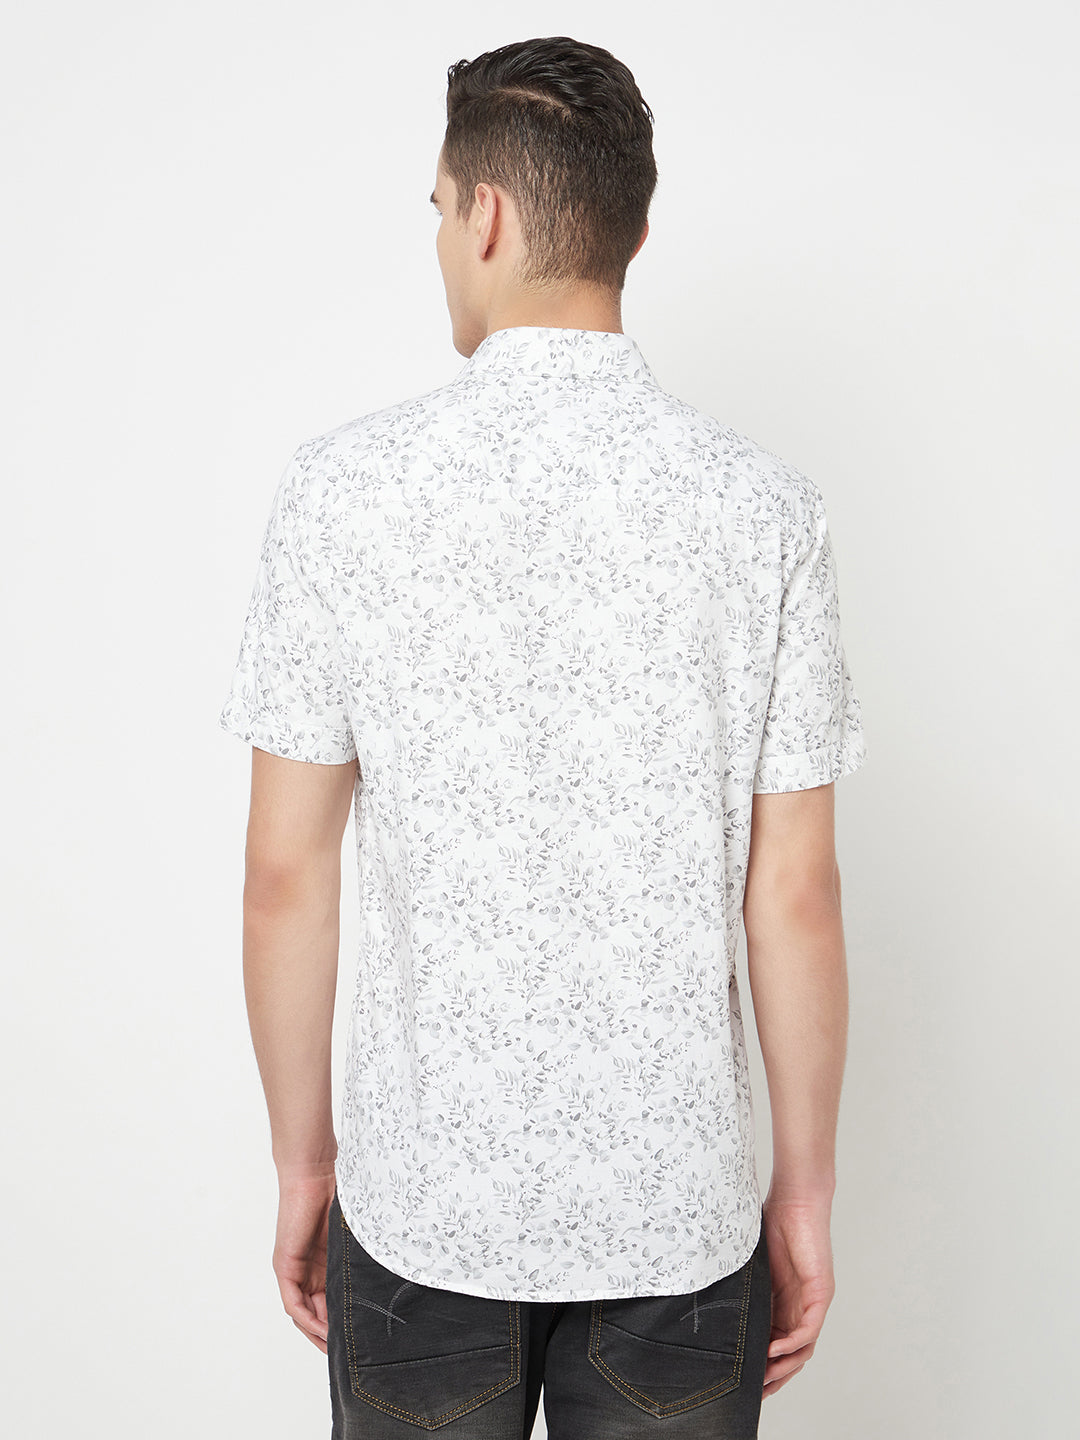 White Floral Printed Shirt - Men Shirts